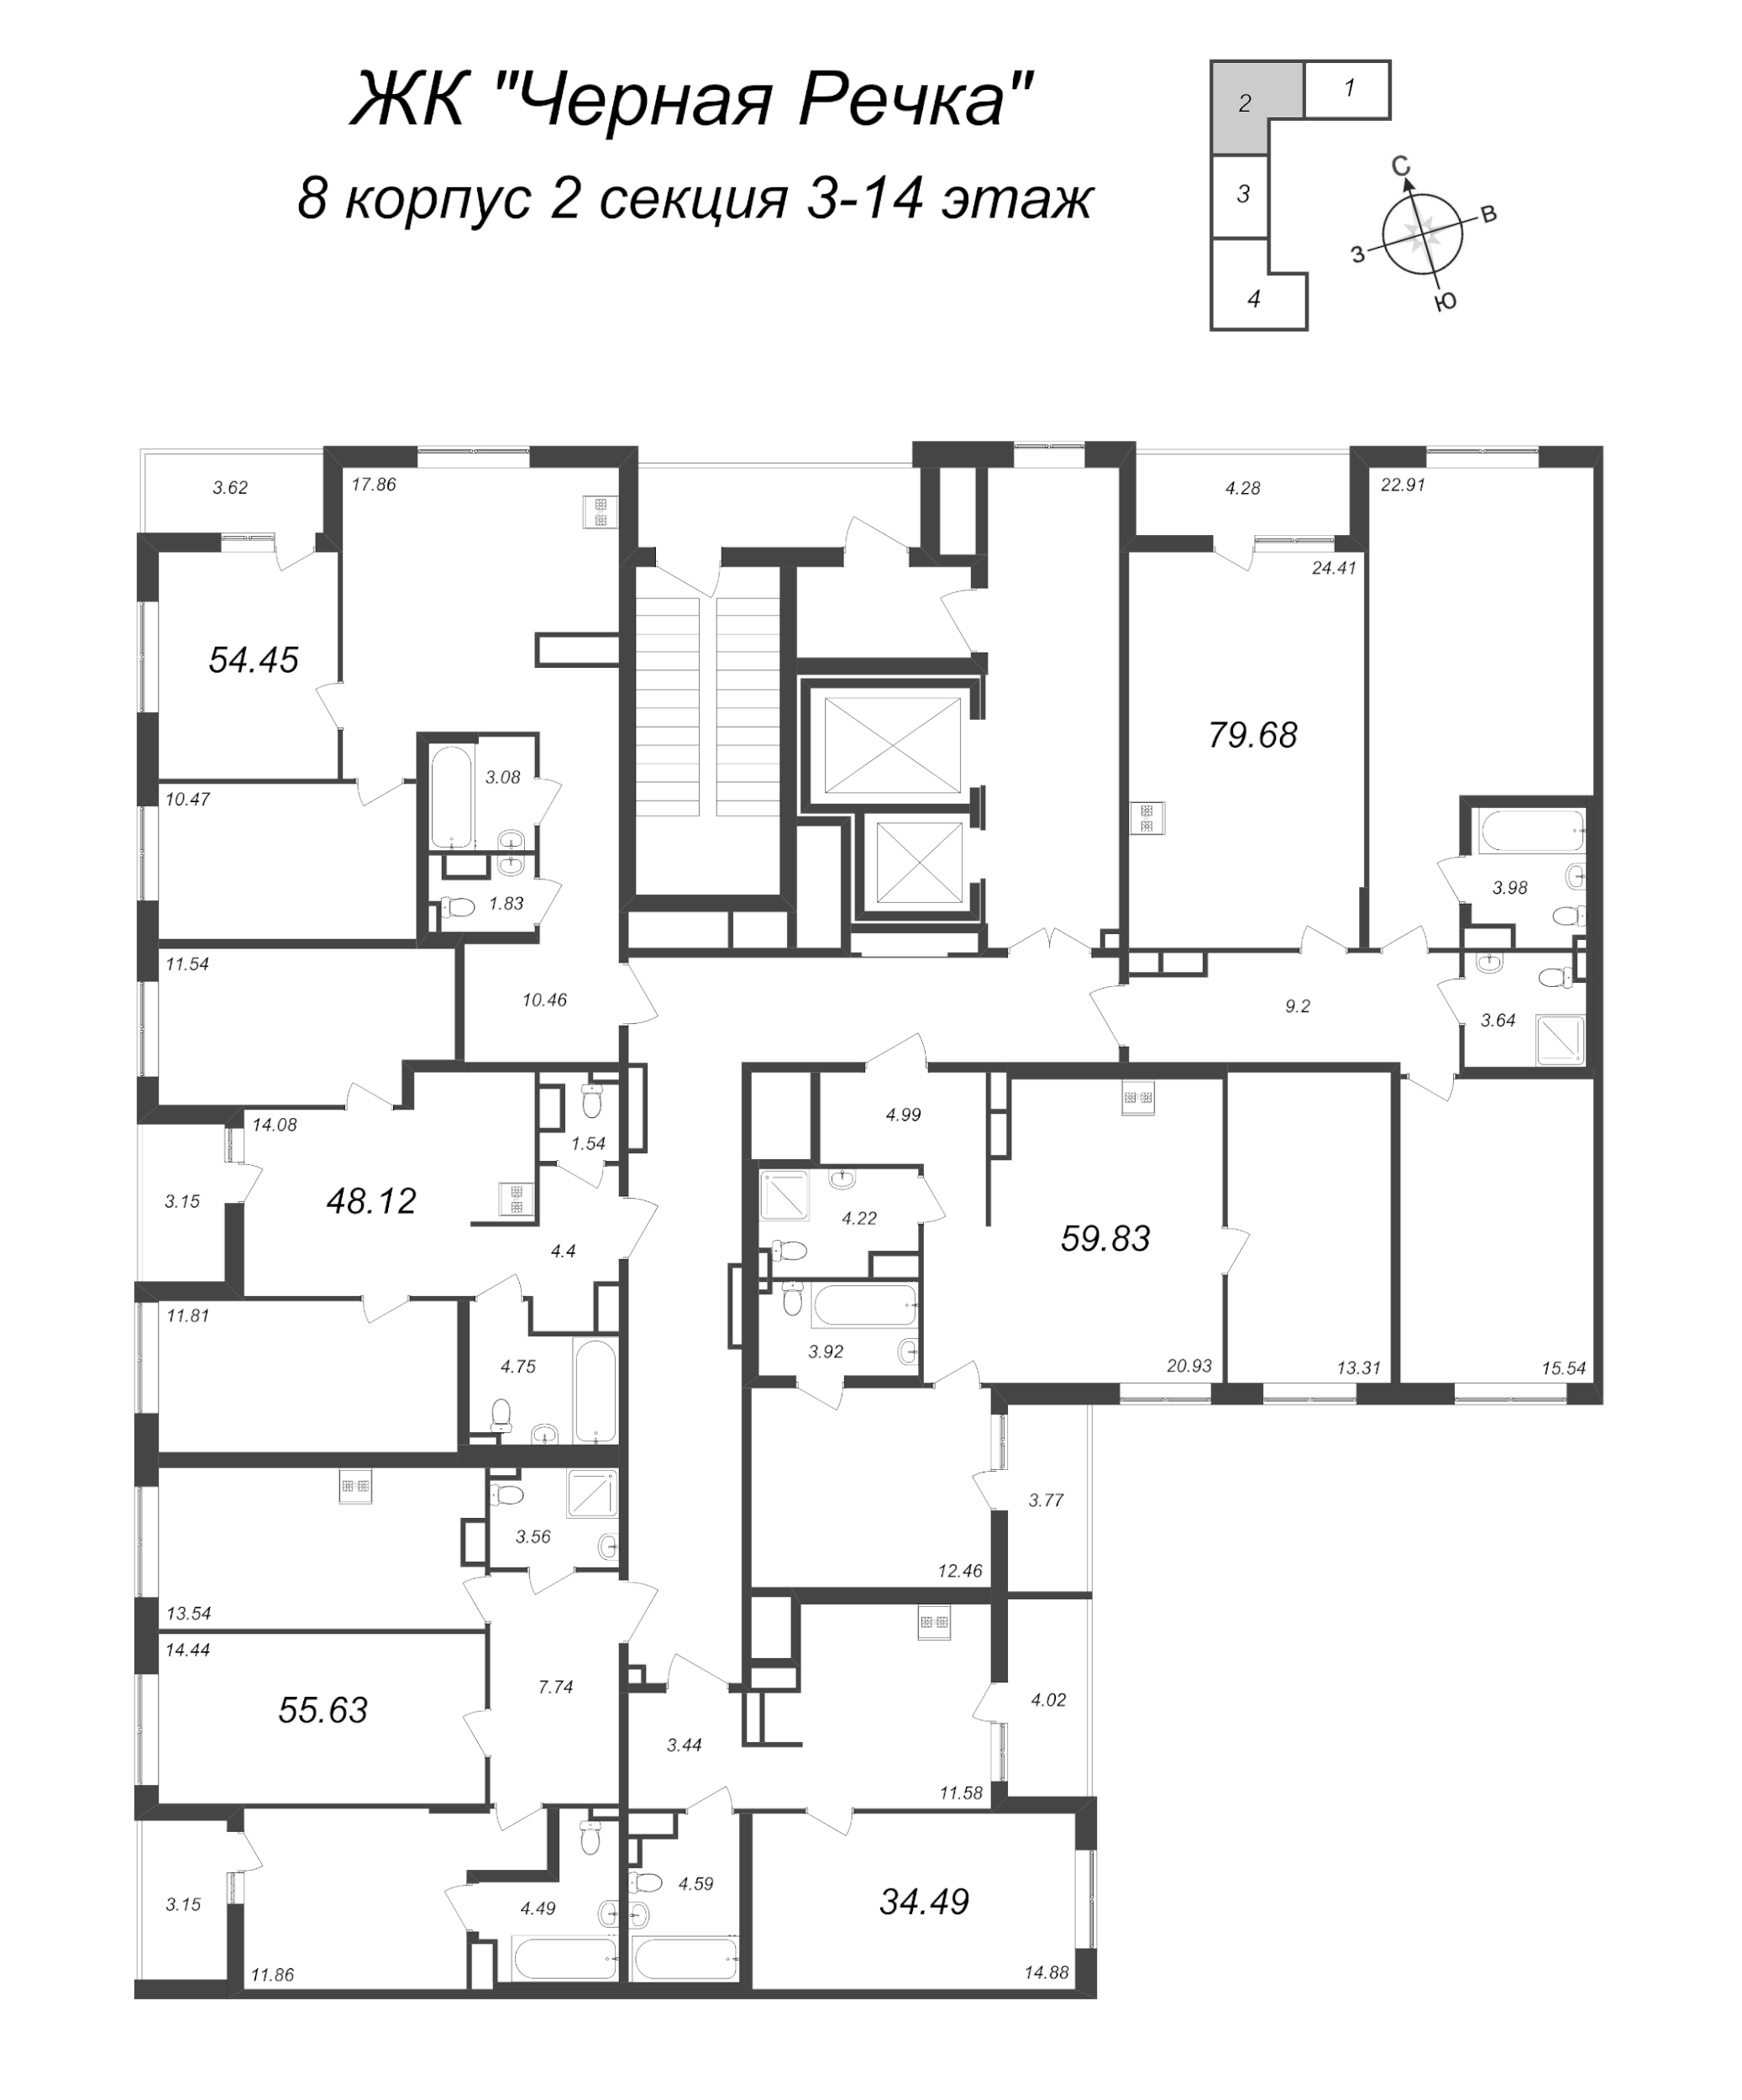 1-комнатная квартира, 34.49 м² в ЖК "Чёрная речка от Ильича" - планировка этажа